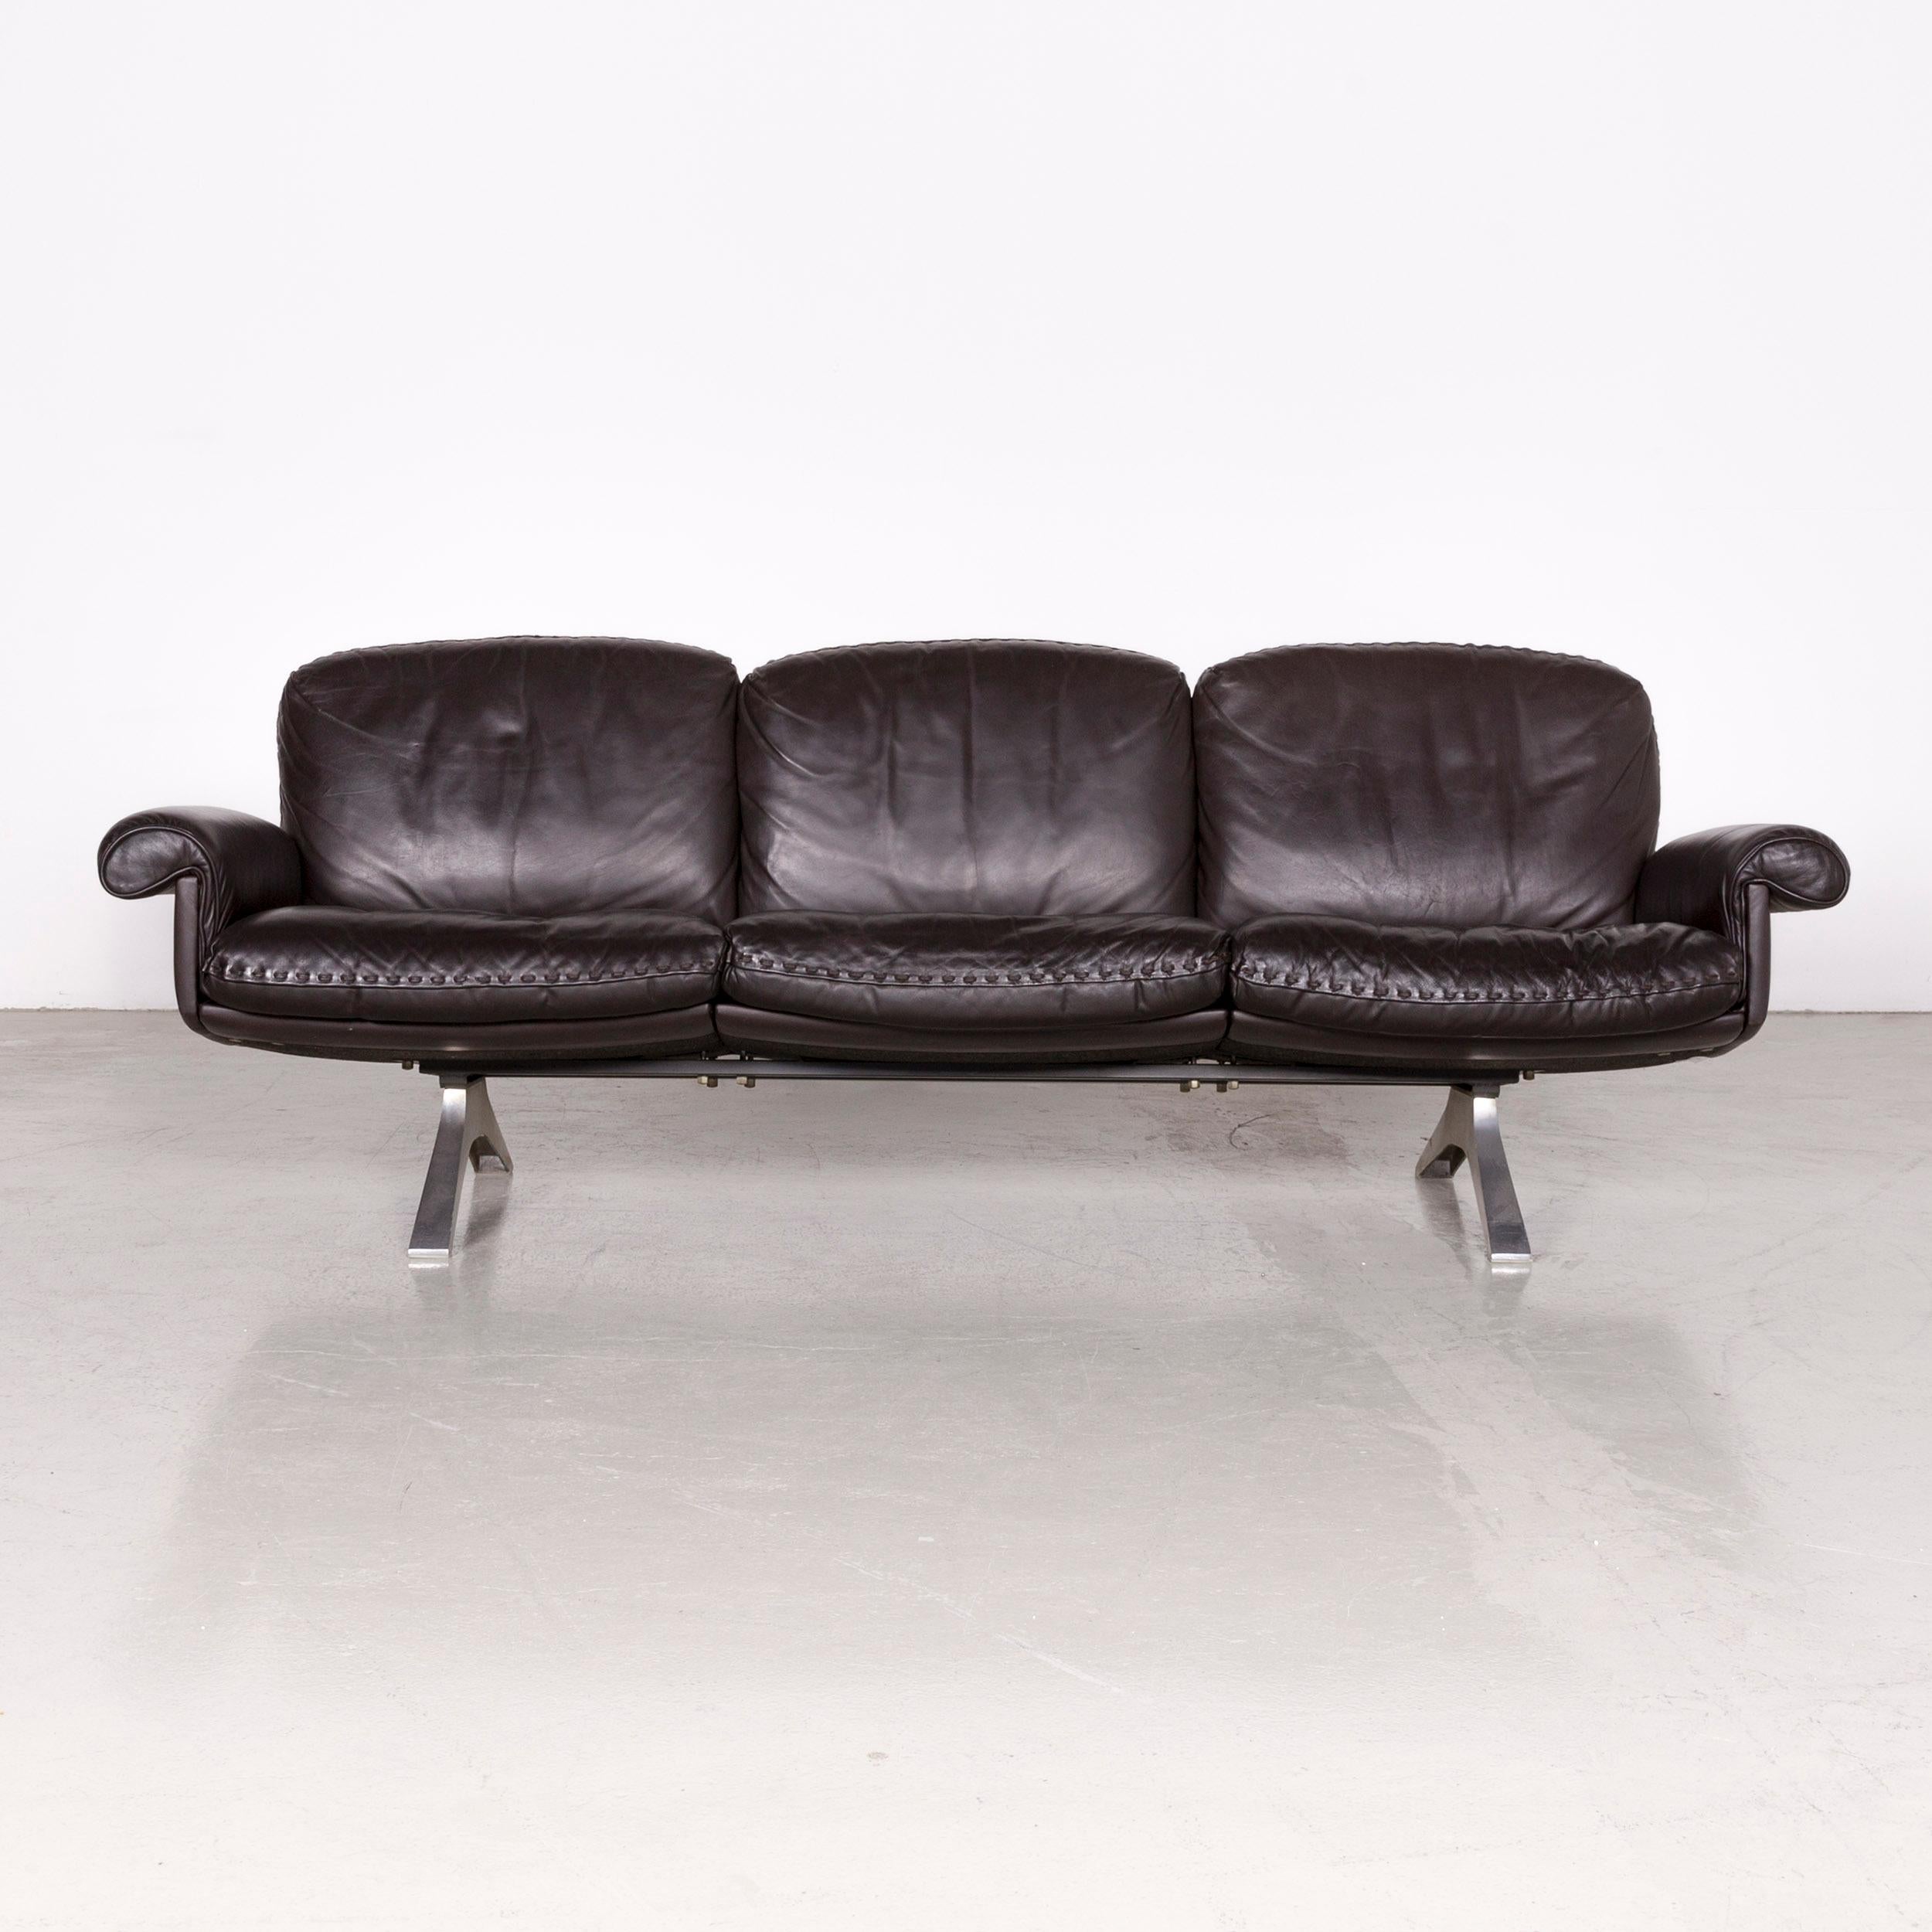 De Sede designer DS 31 designer leather sofa armchair set brown three-seat couch.